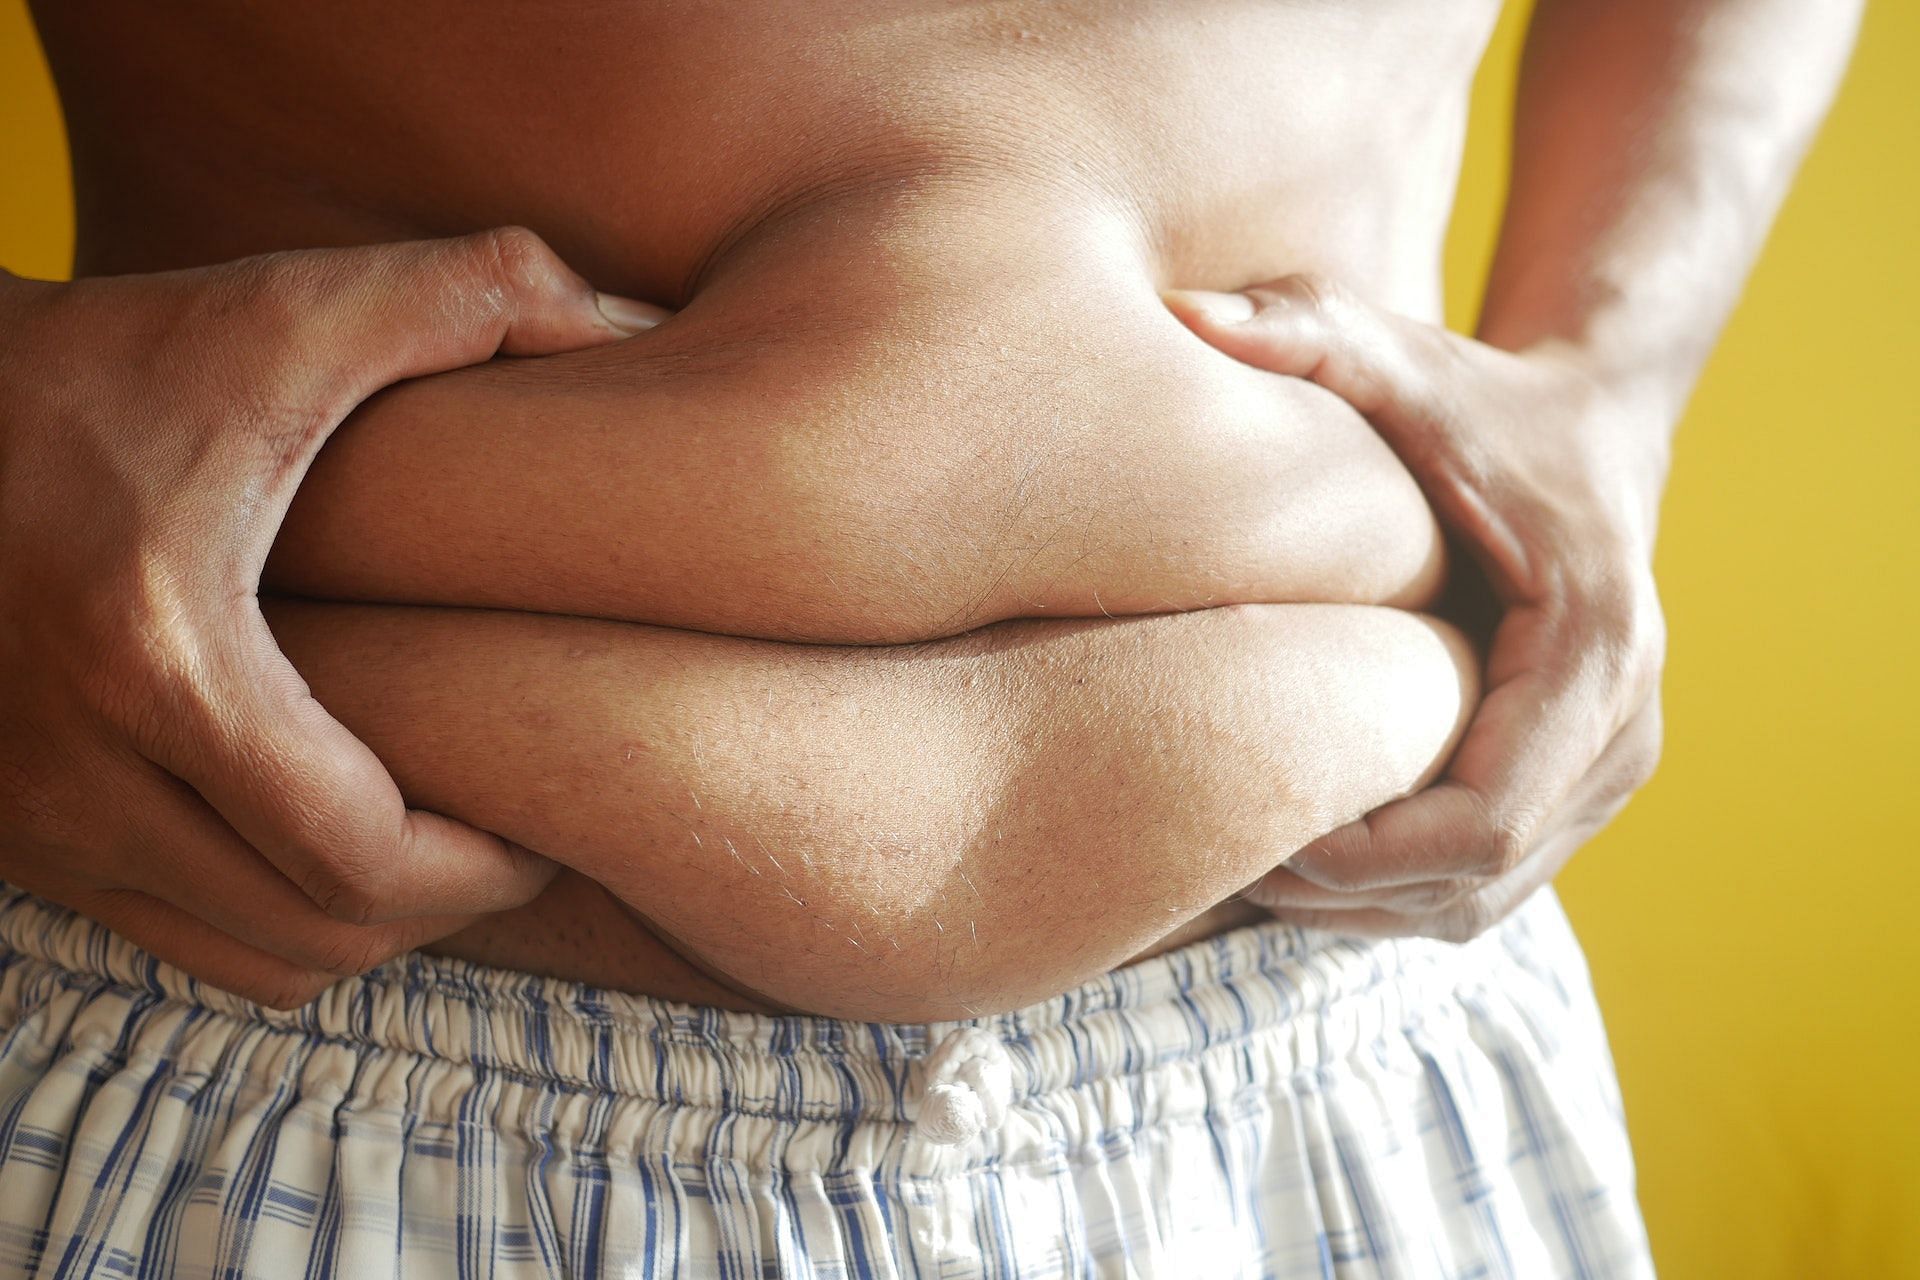 Belly fat exercises tone the entire core muscles. (Photo via Pexels/Towfiqu barbhuiya)